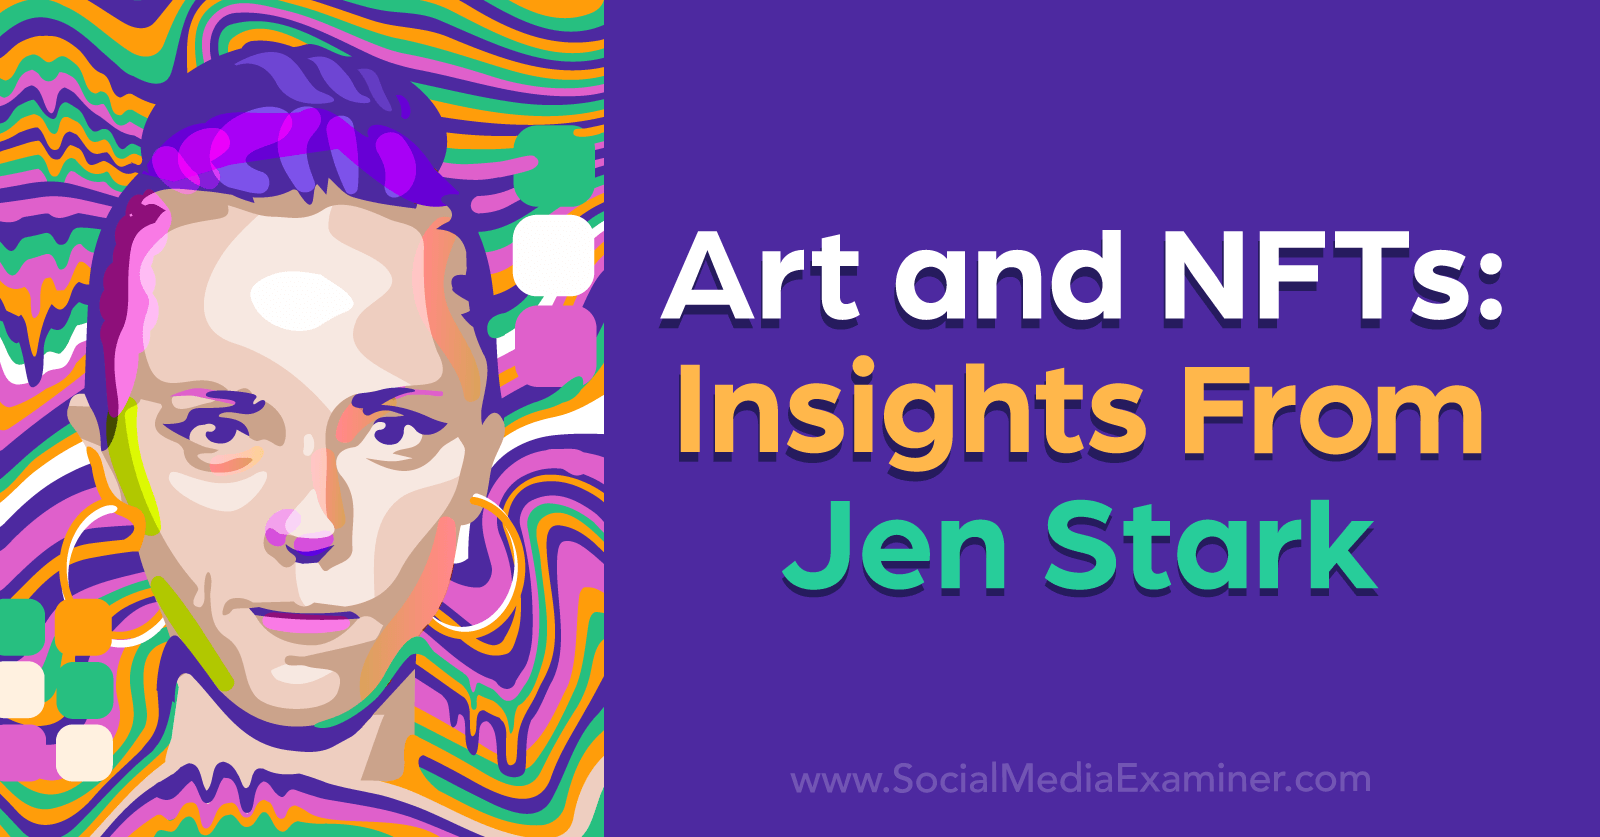 Art and NFTs: Insights From Jen Stark by Social Media Examiner